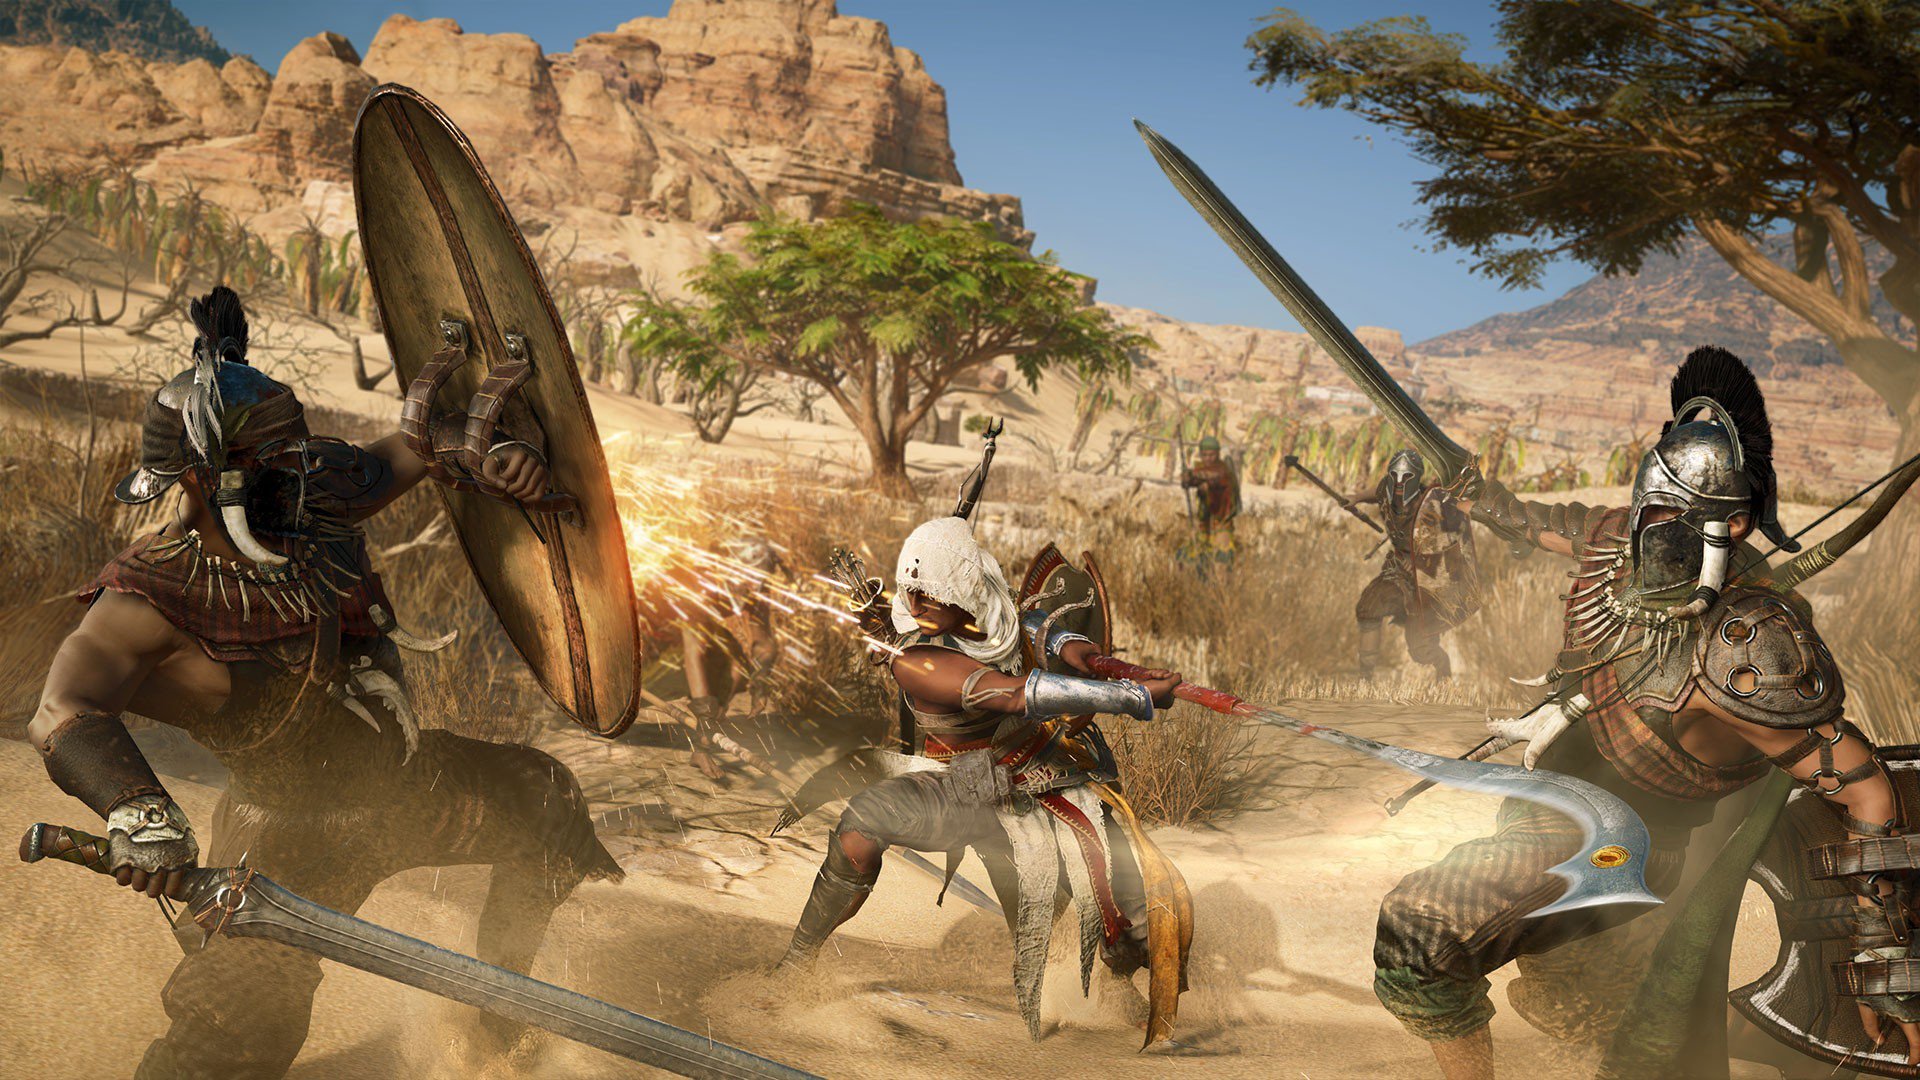 ESD Assassins Creed Origins Gold Edition 